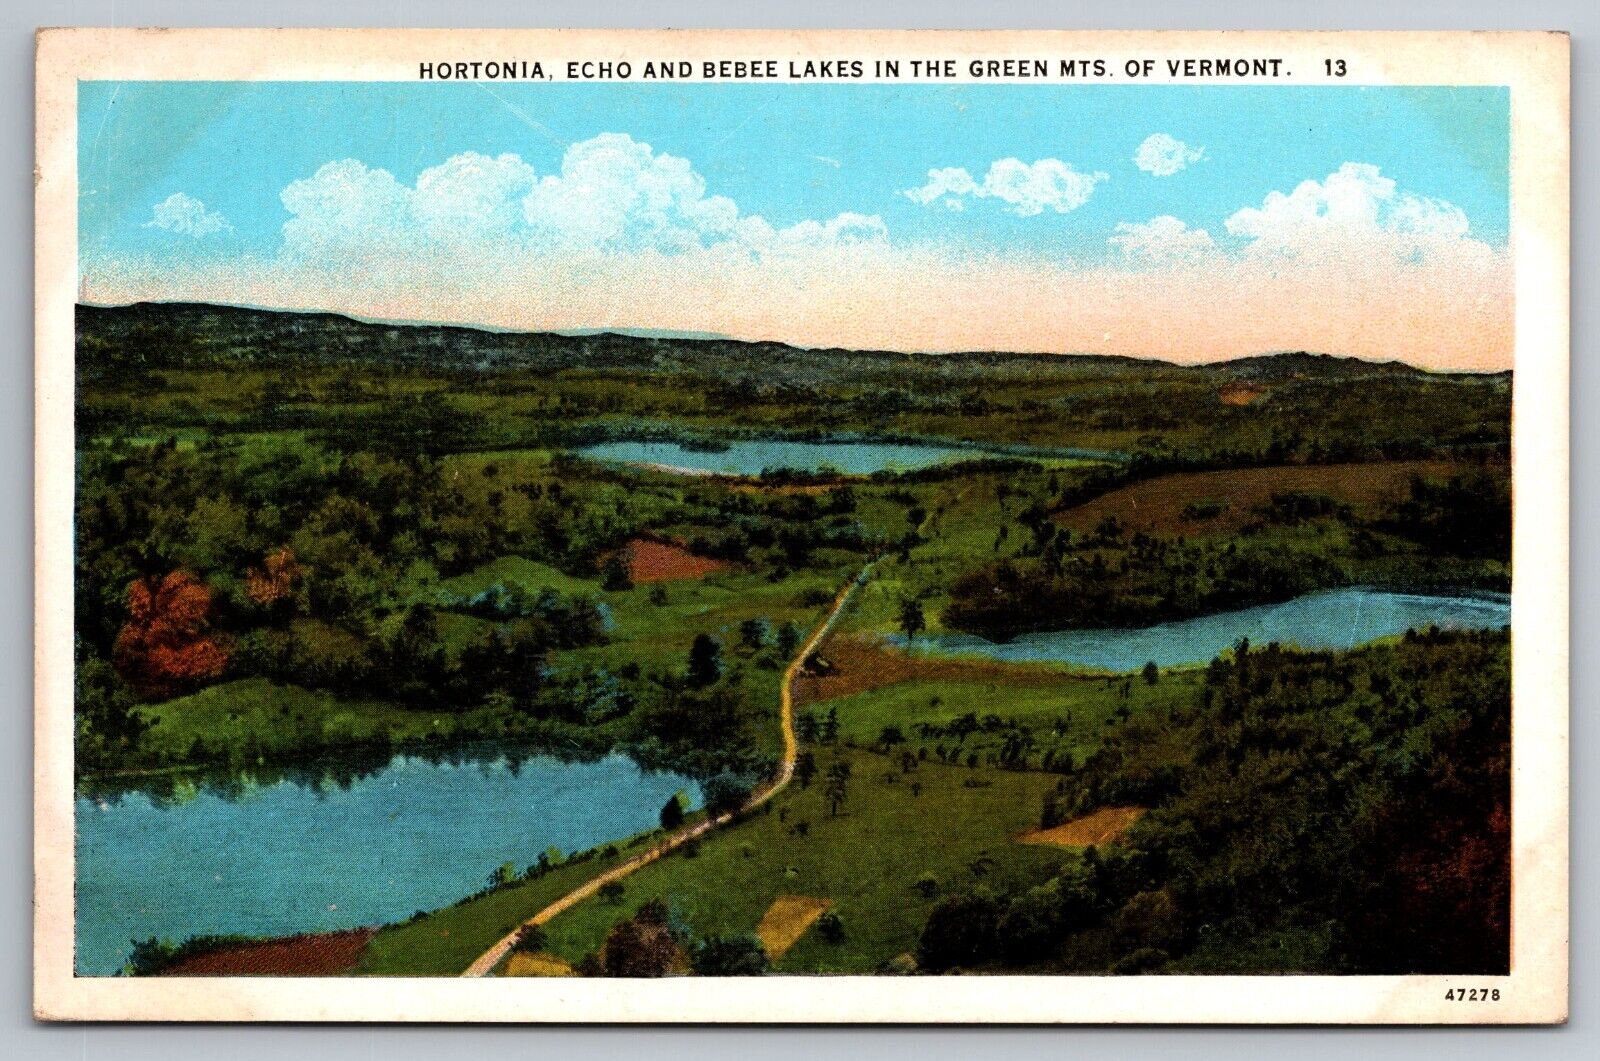 Hortonia, Echo, and Bebee Lakes, Green Mountains Vermont Vintage Postcard